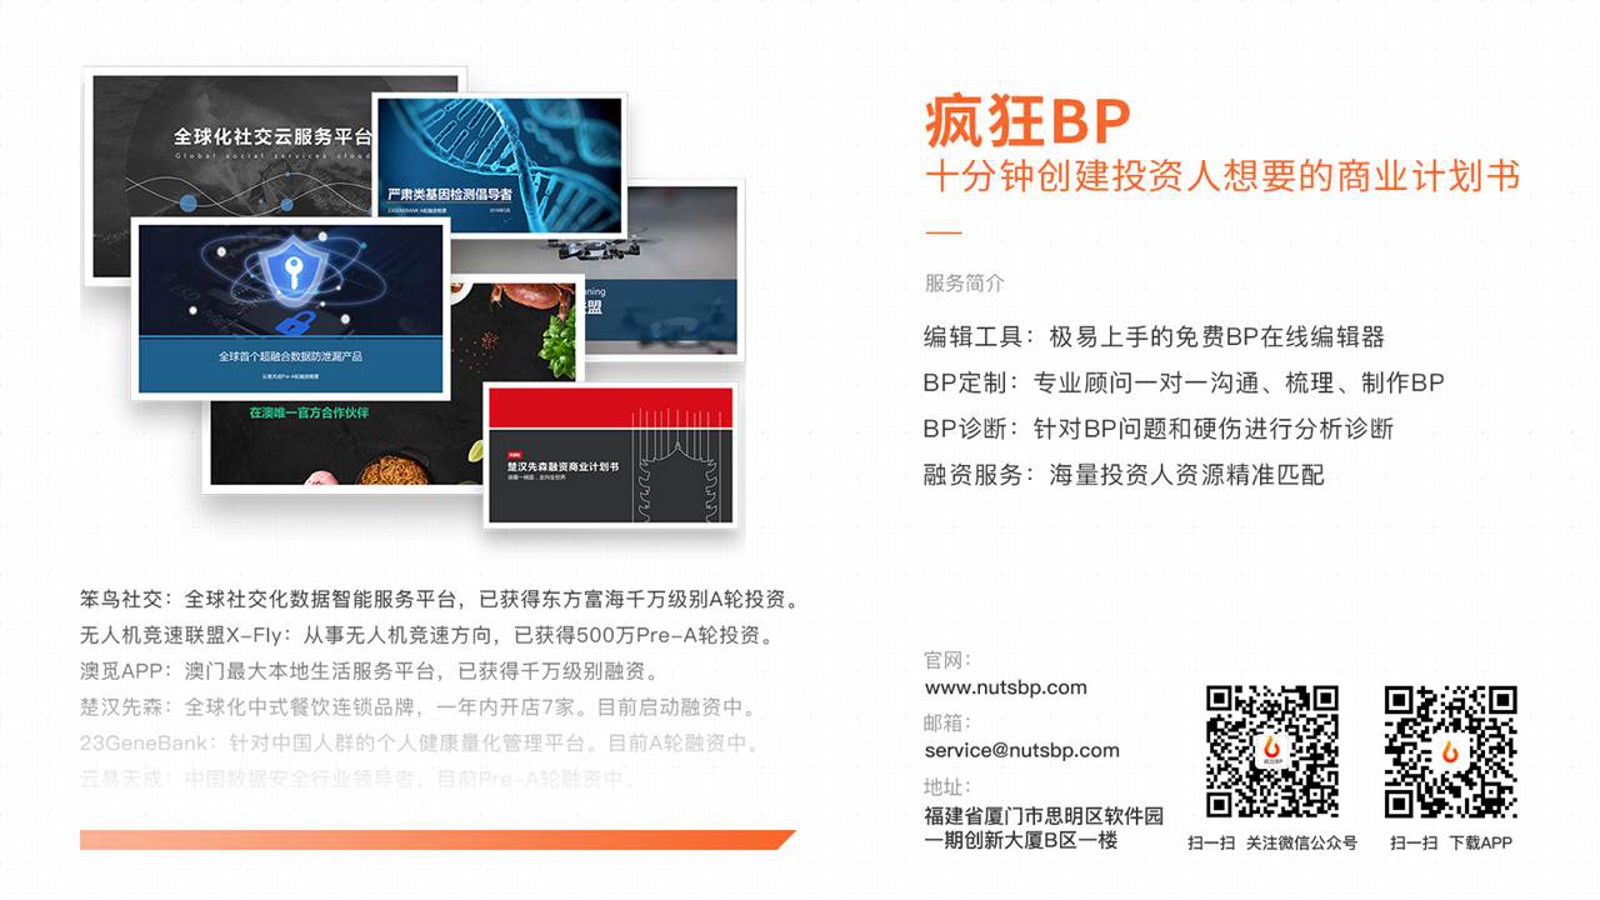 [Eeeat]新零售海外华人线上生鲜超市商业计划书模板范文-undefined